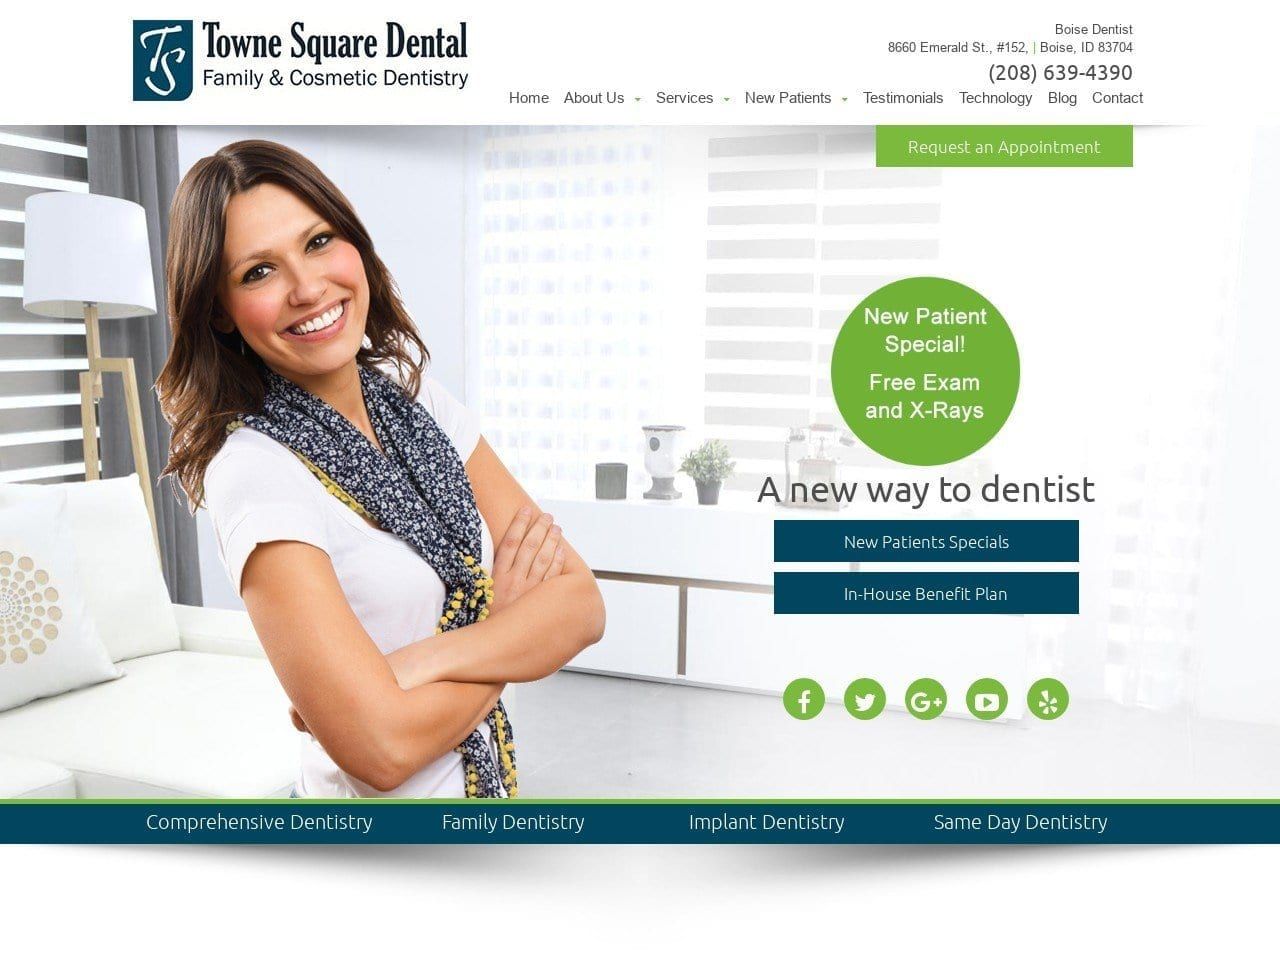 Boisetownesquare Dental Website Screenshot from boisetownesquaredental.com